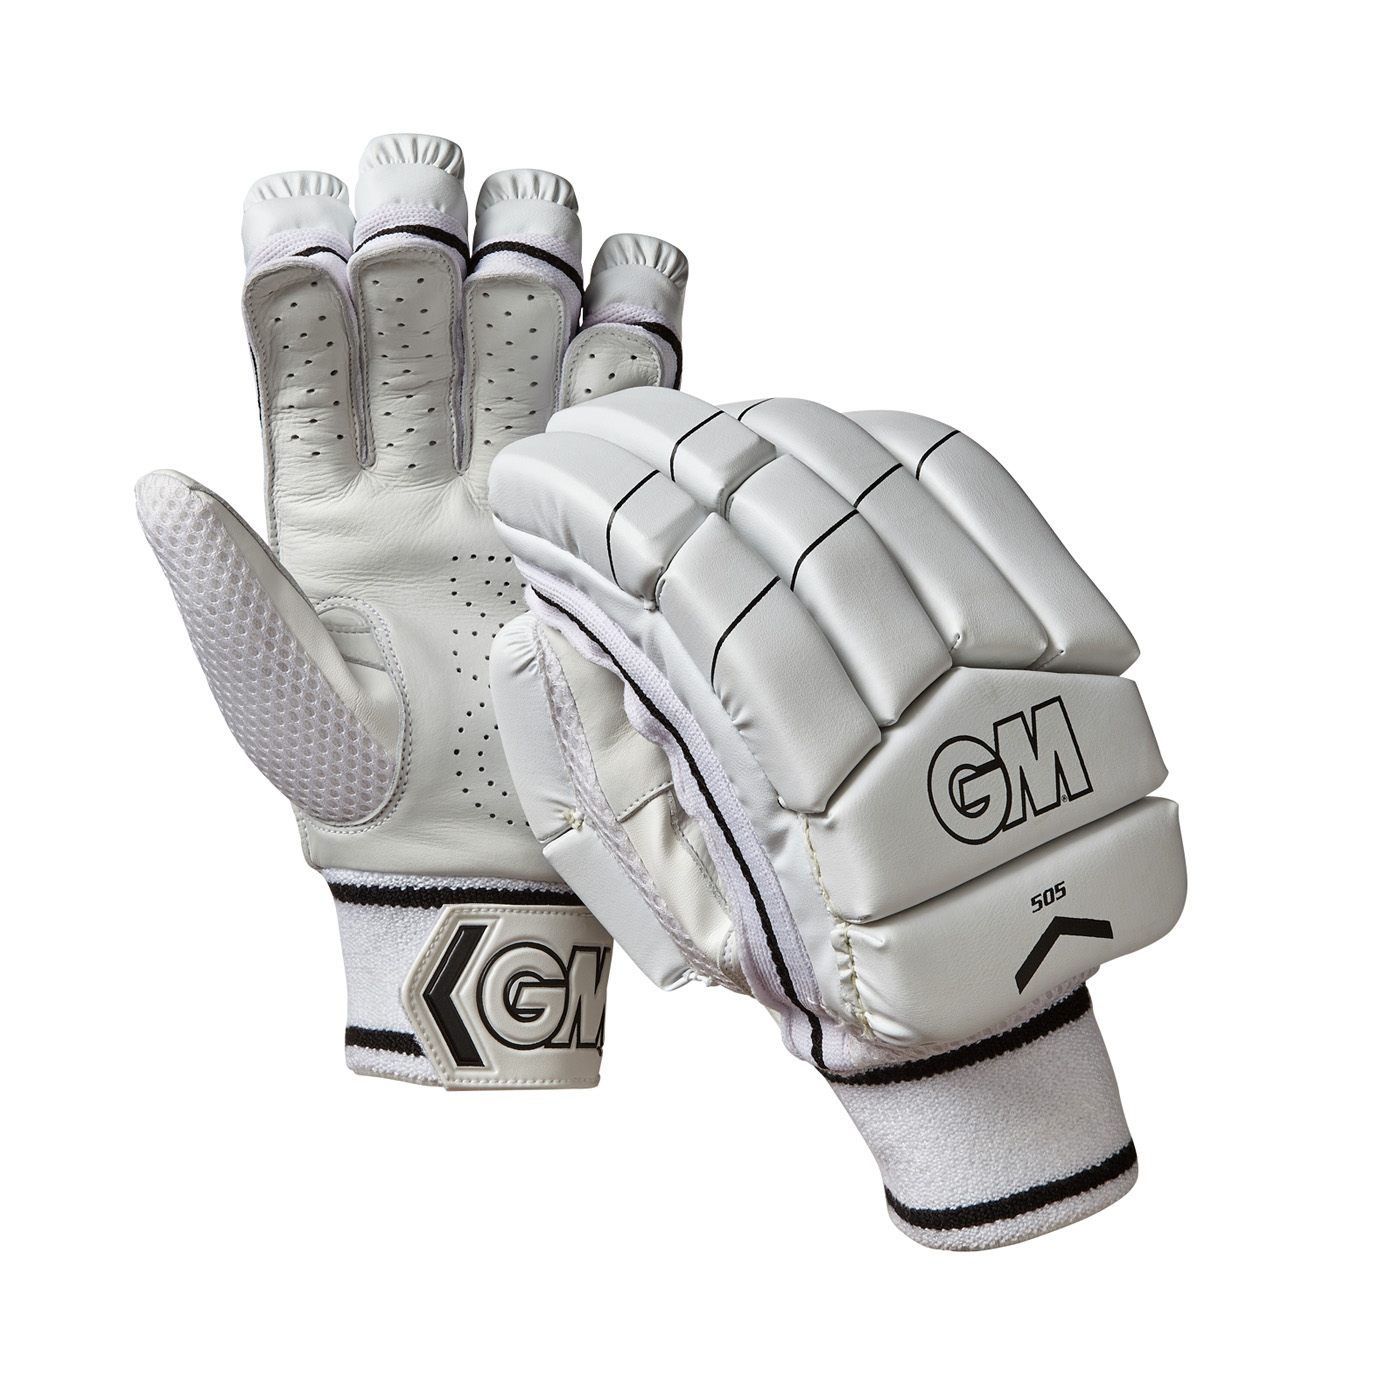 GM-505-Batting-Gloves-20